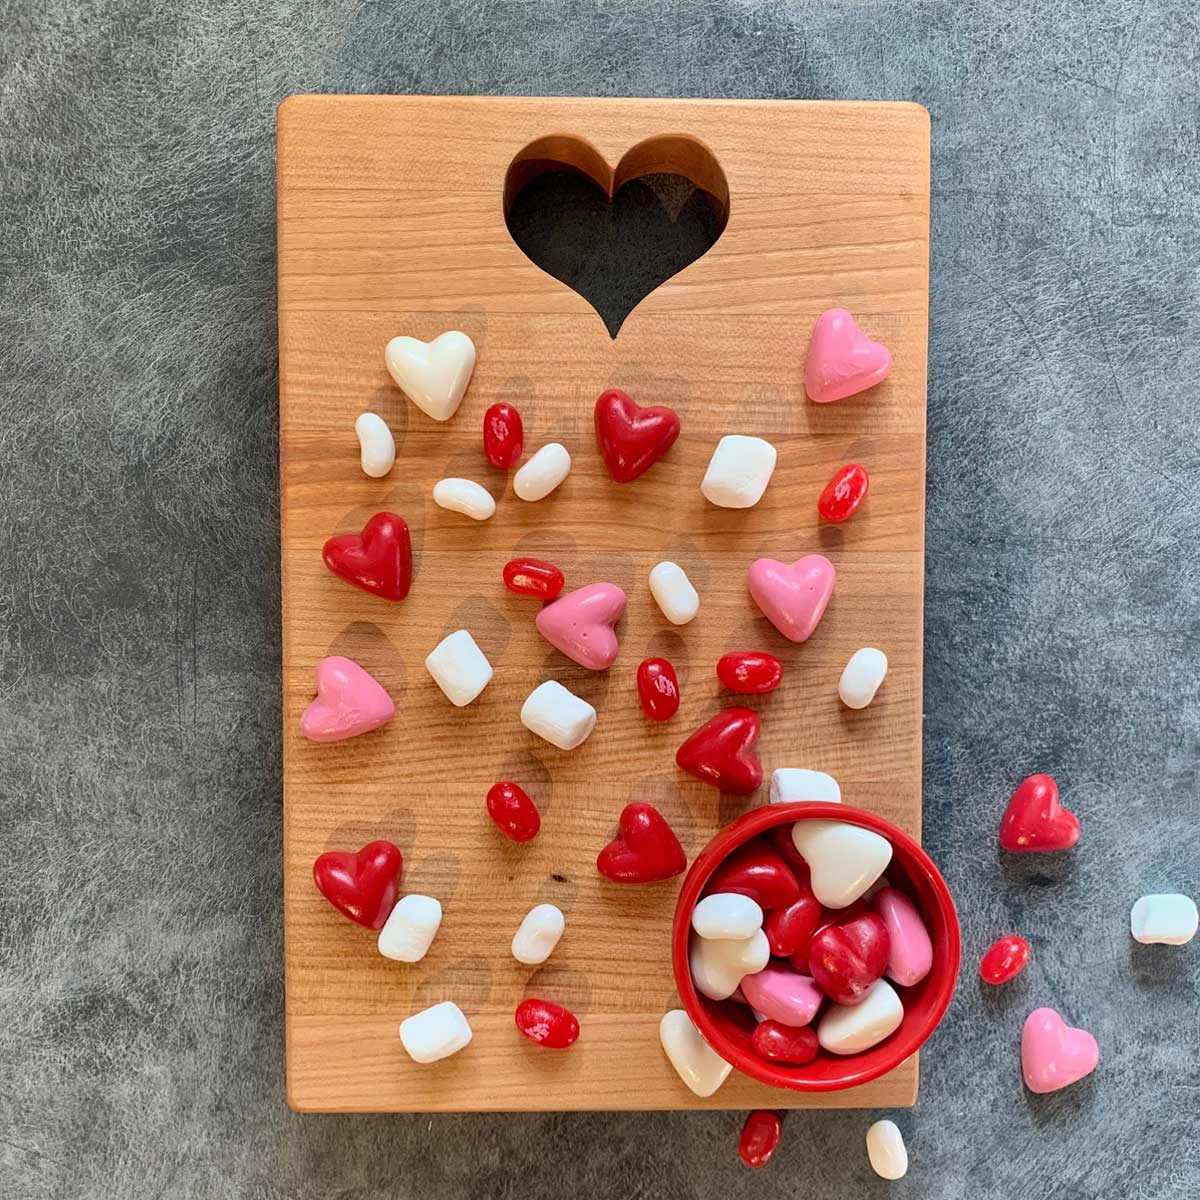 heart chopping board, heart shape cut out of top, wooden cutting board